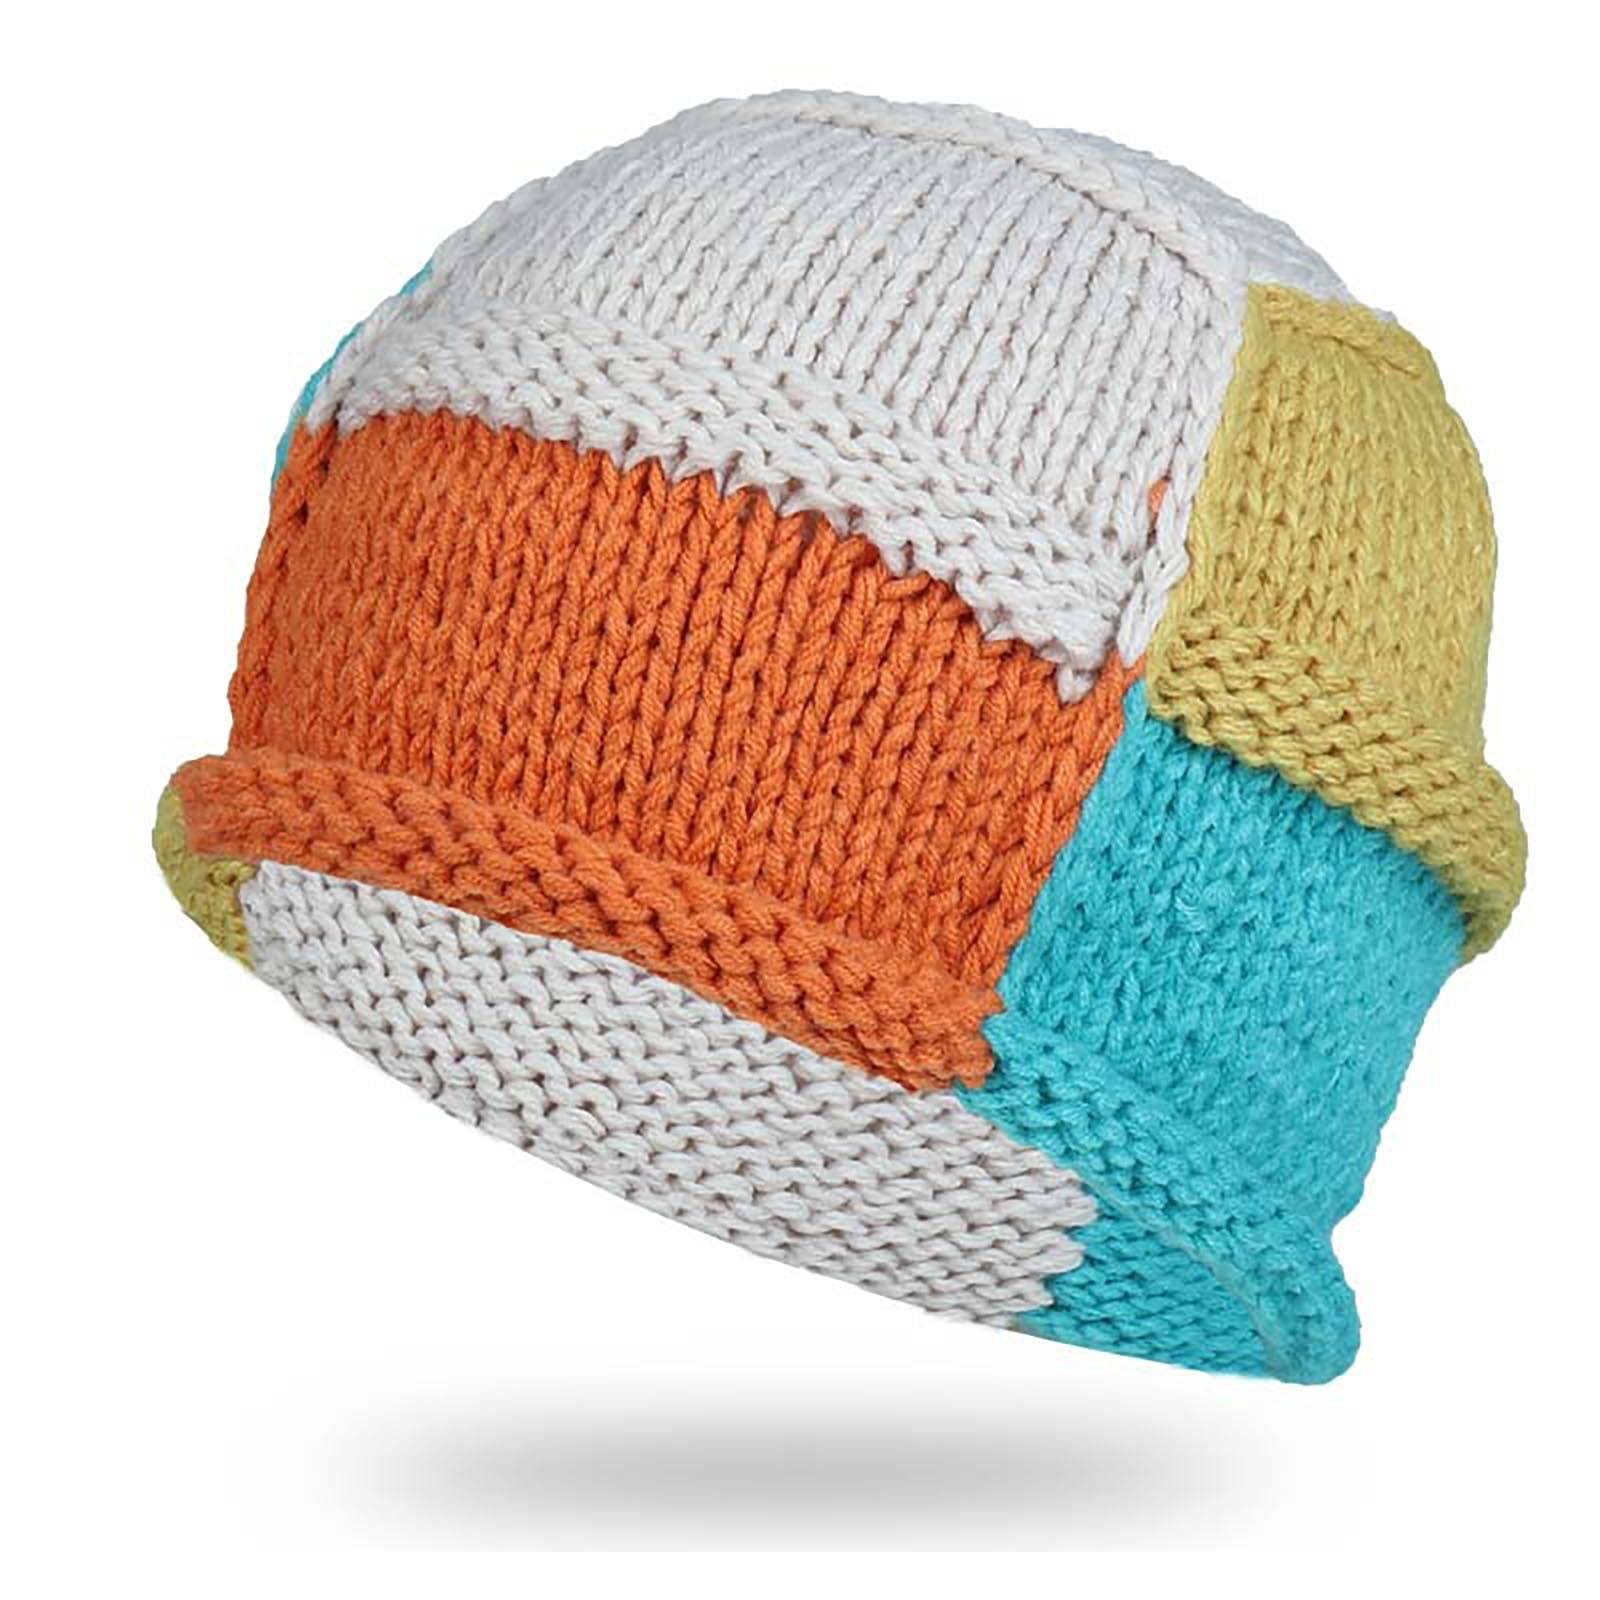 KDDYLITQ Wool Knit Beanie Small Hats Knitted Ski Chunky Knit Skull 